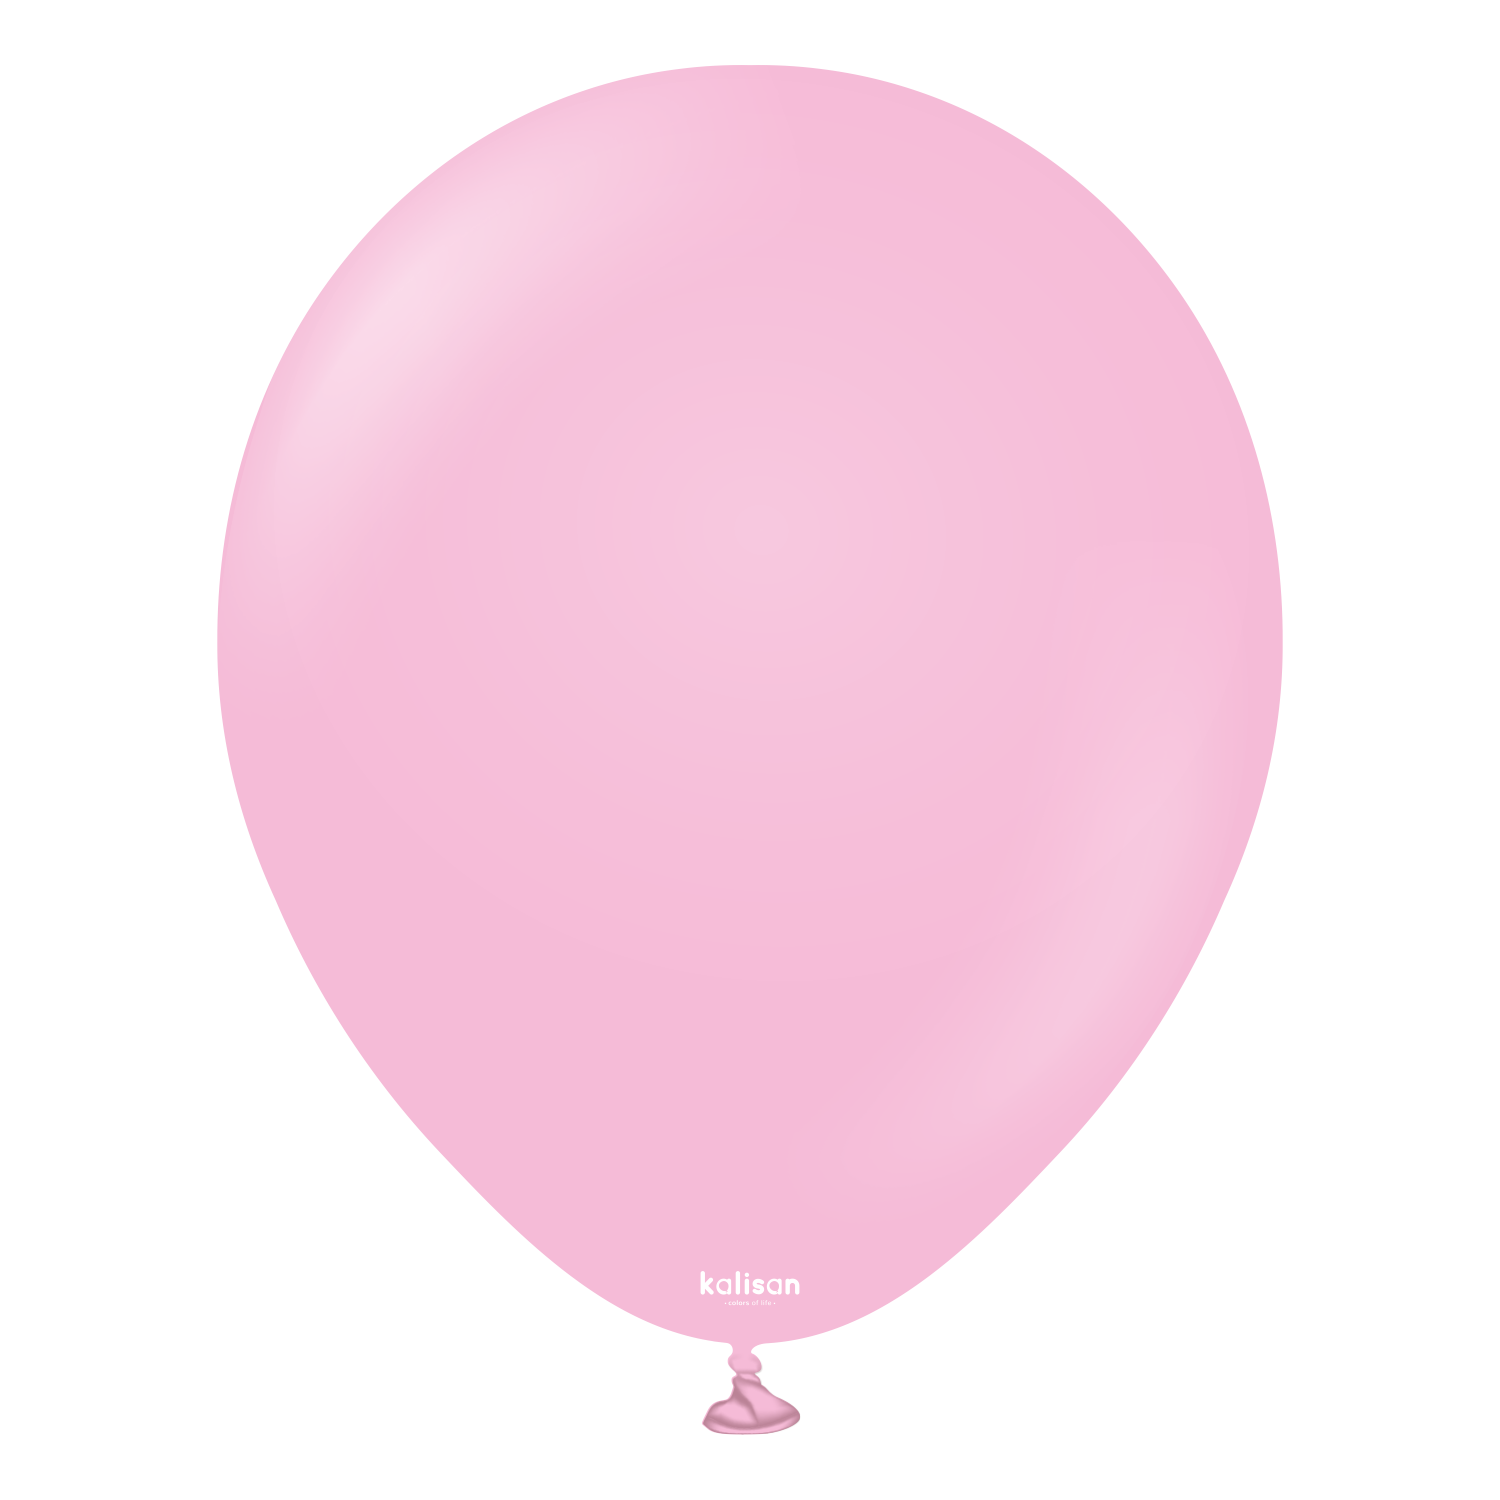 Premium lateksballong Kalisan i rosa farge 